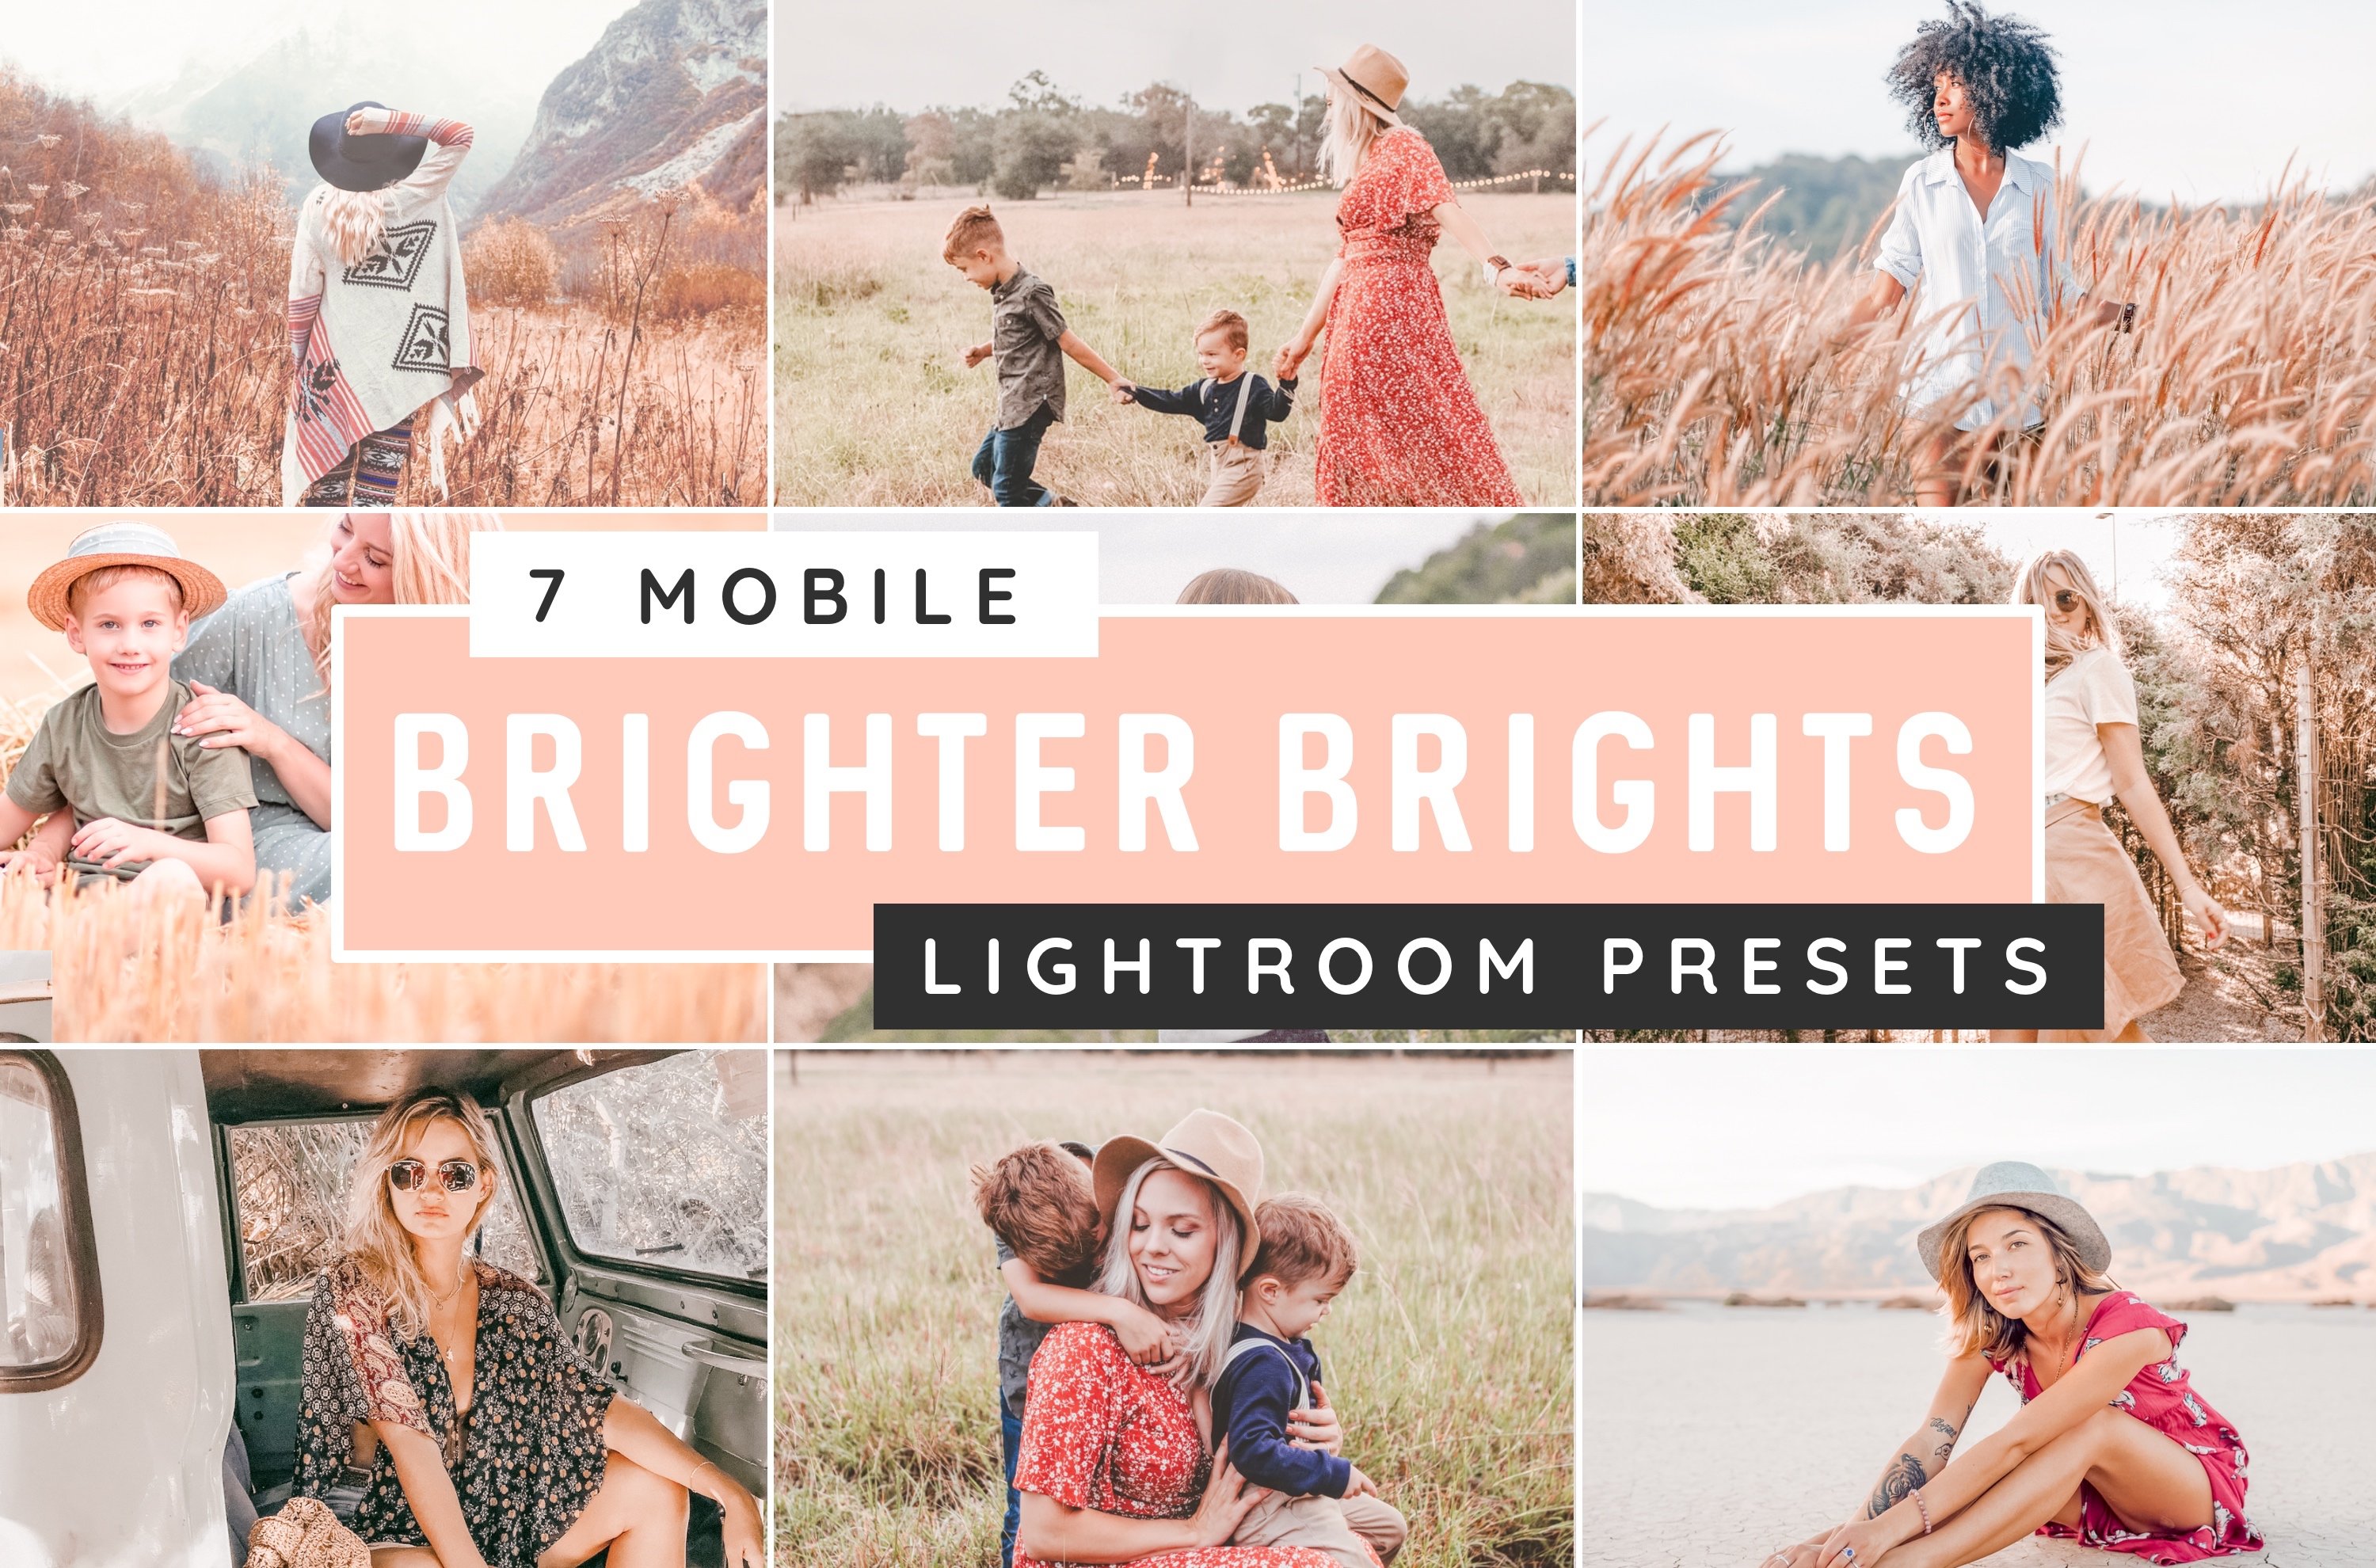 Brights Lightroom mobile presetscover image.